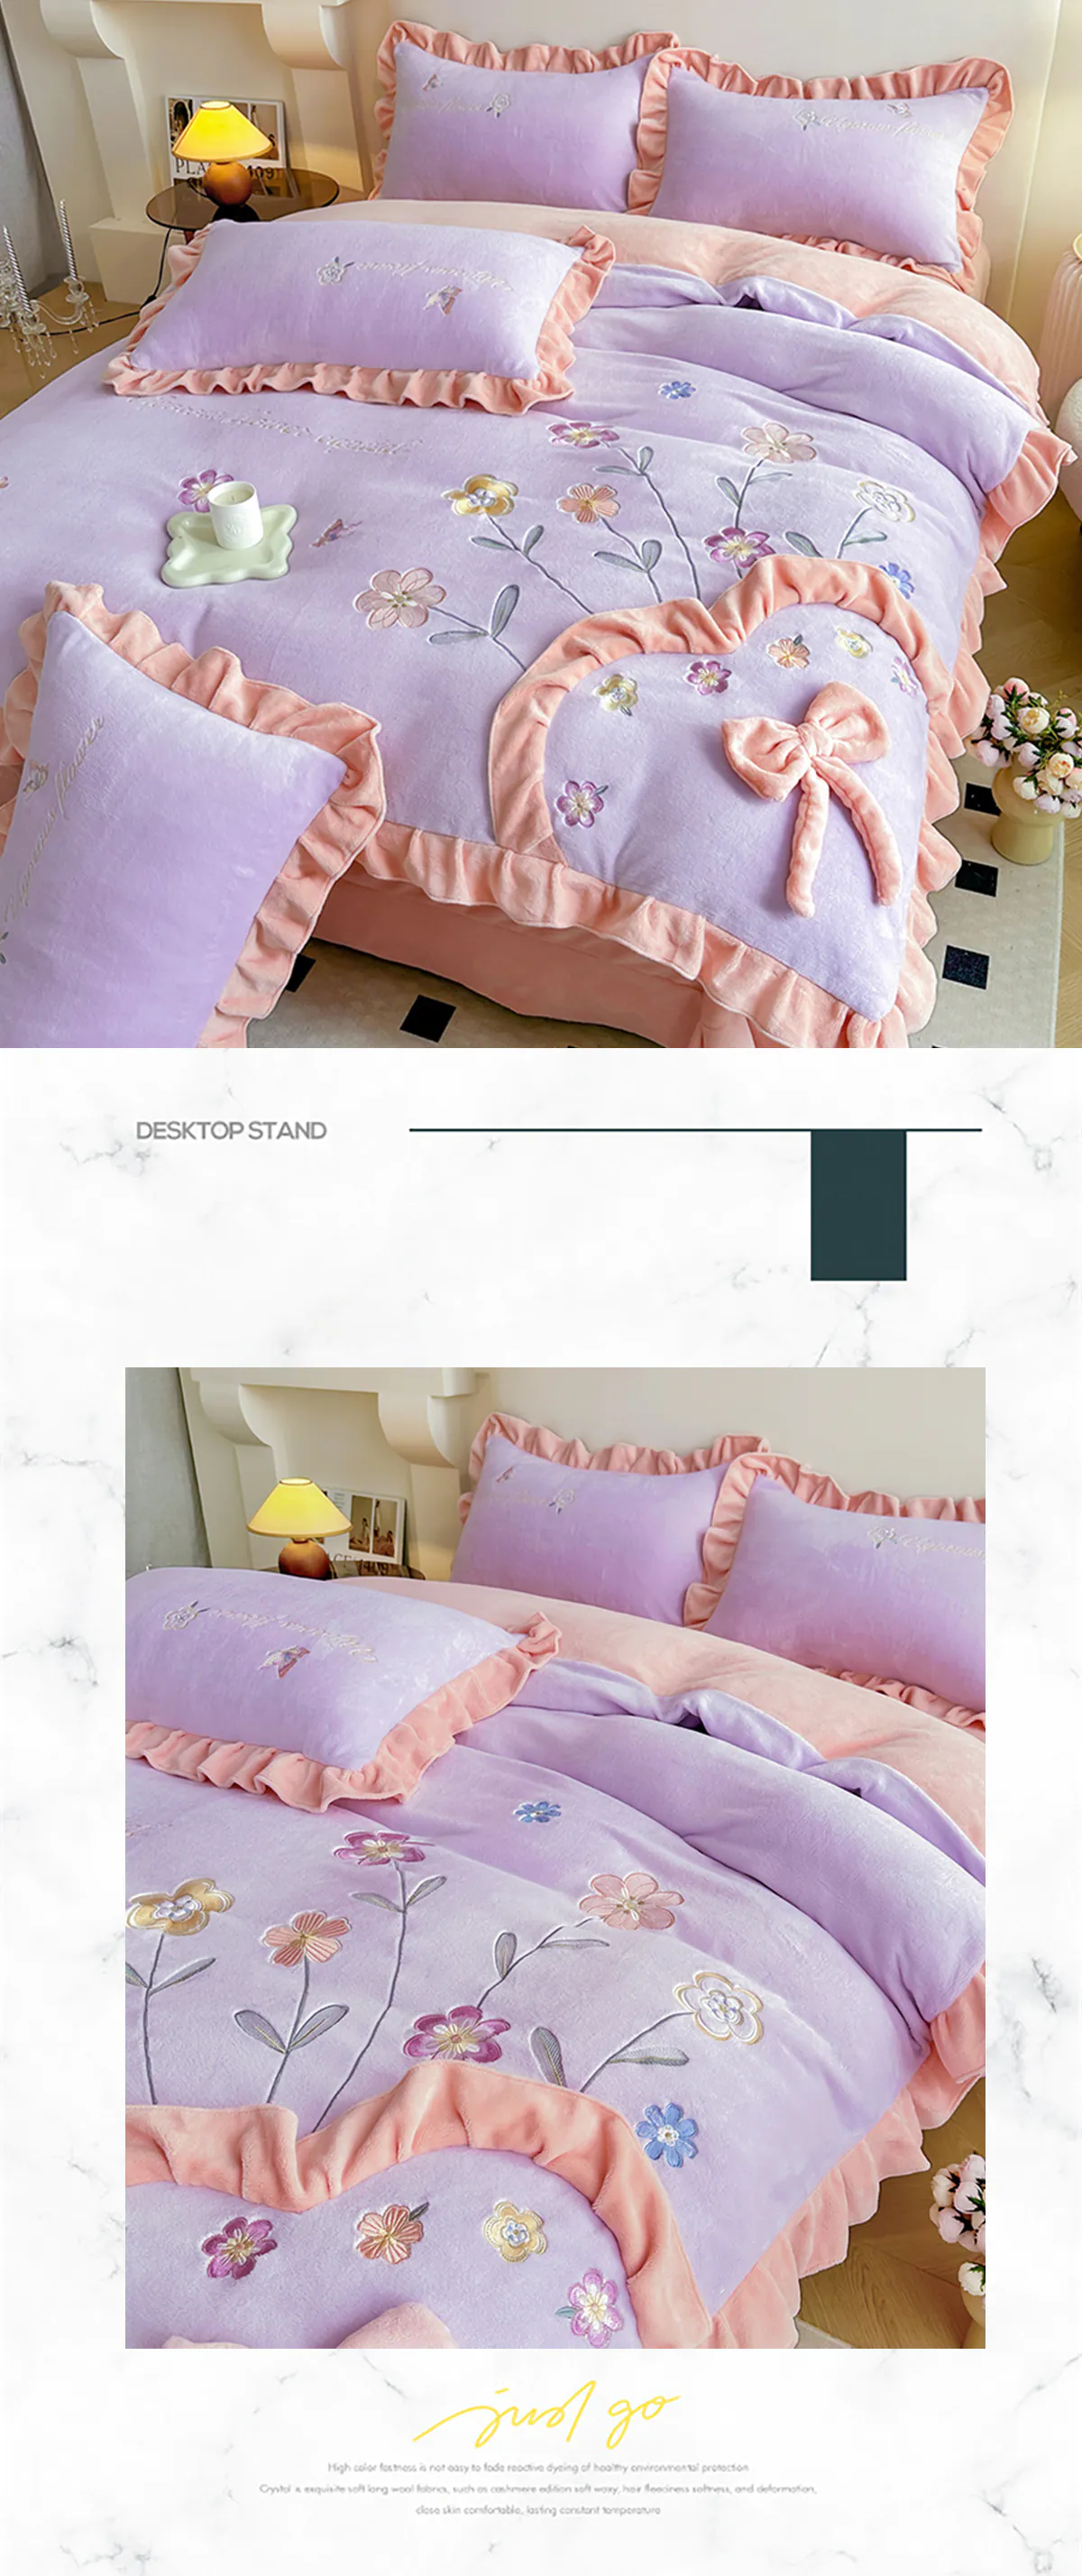 Romantic-Milk-Fiber-Comforter-Cover-Bed-Sheet-Pillowcases-4-Pcs-Set24